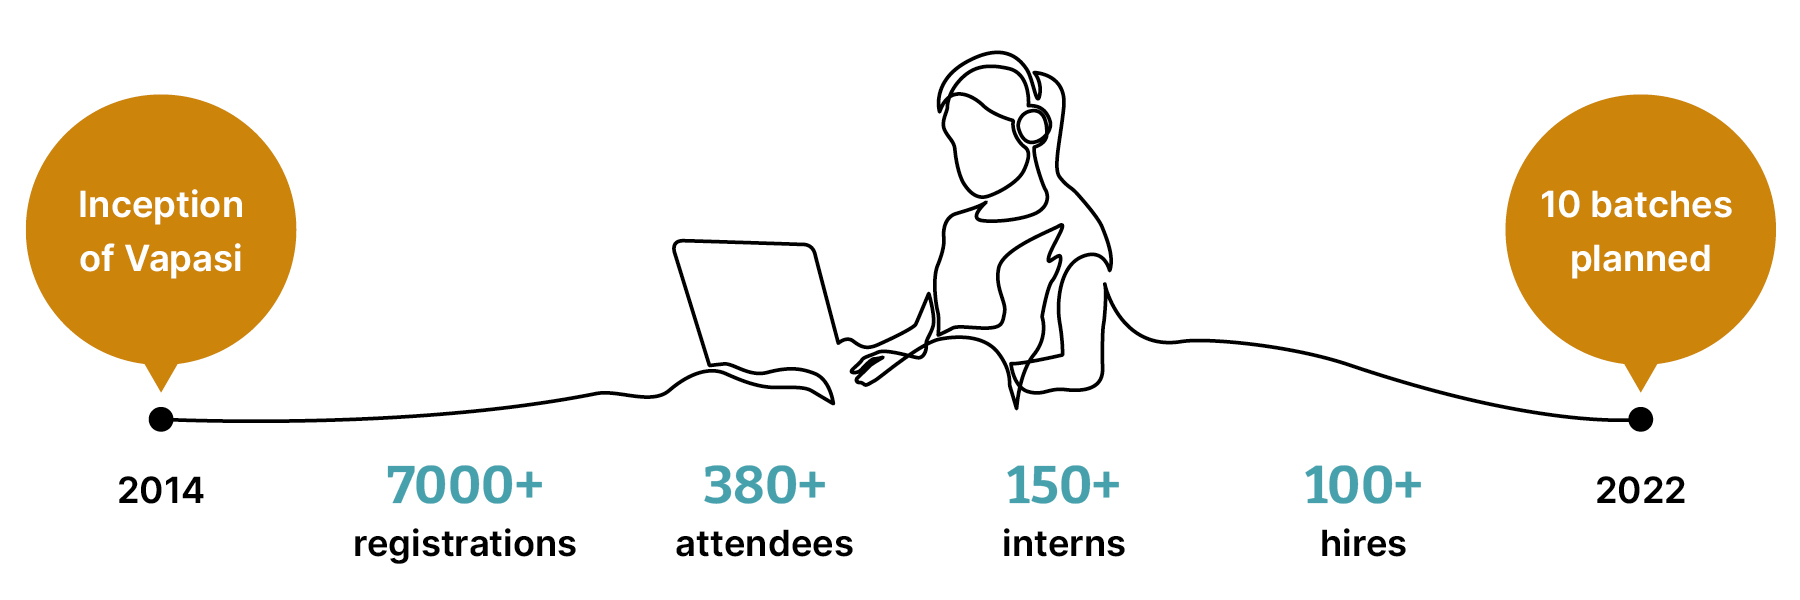 Timeline showing Vapasi milestones, beginning in 2014: 7000 registrations, 380+ attendees, 150+ interns and 100+ hires